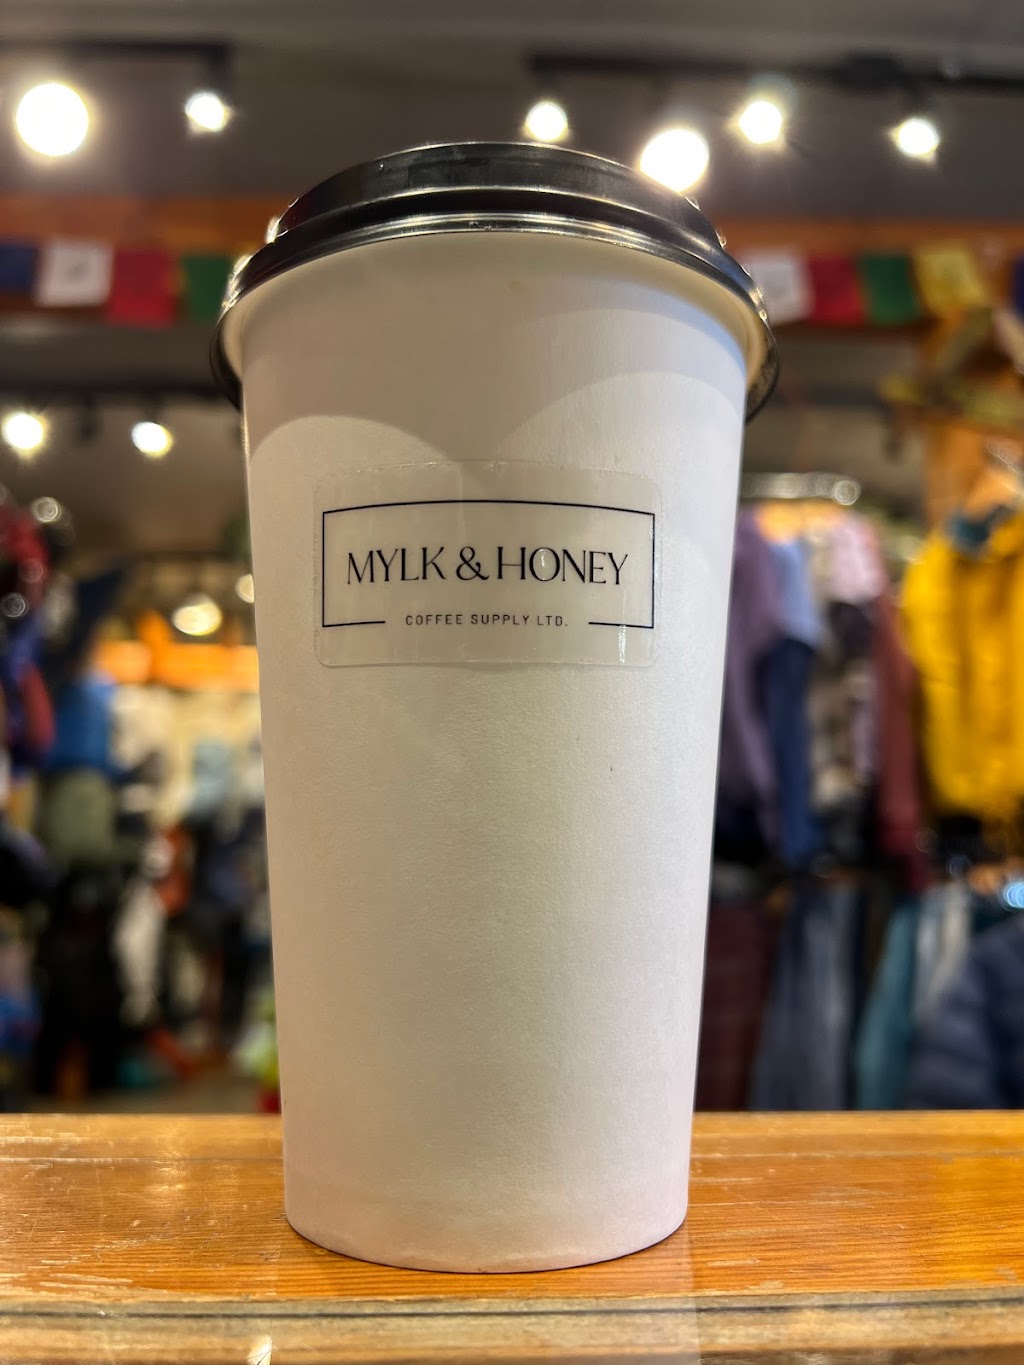 Mylk & Honey Coffee Supply Limited | Peach Park, Rotary Trail, Chilliwack, BC V2R 0A4, Canada | Phone: (604) 991-6955